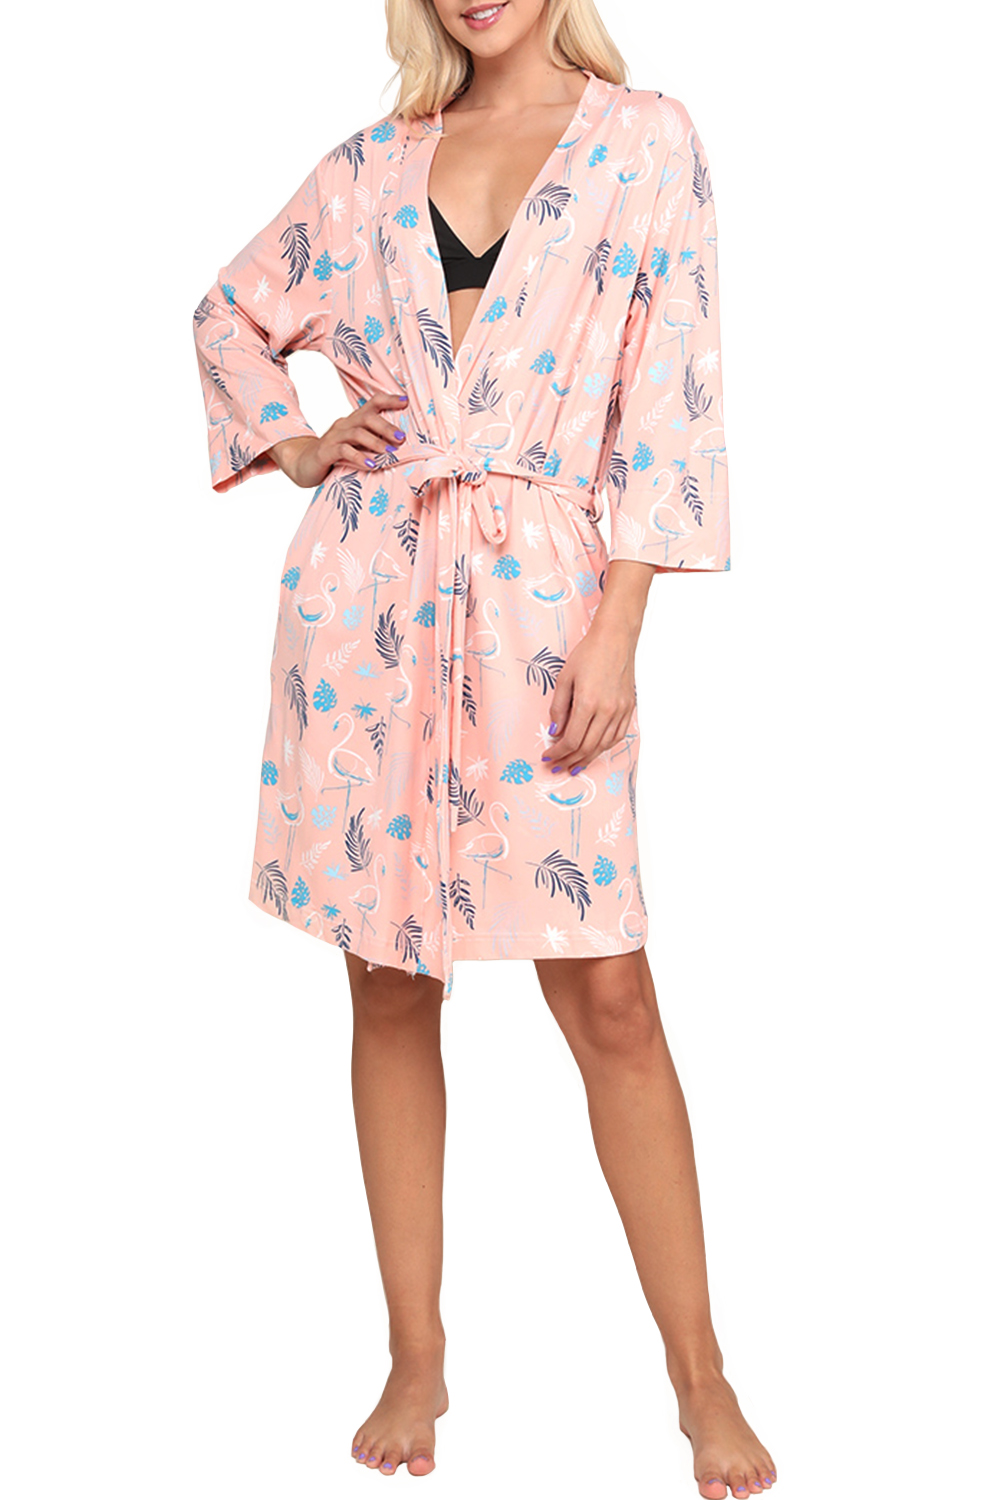 Doublju Women's Kimono Robe Sleepwear Pajama (Plus Size Available) - image 2 of 5